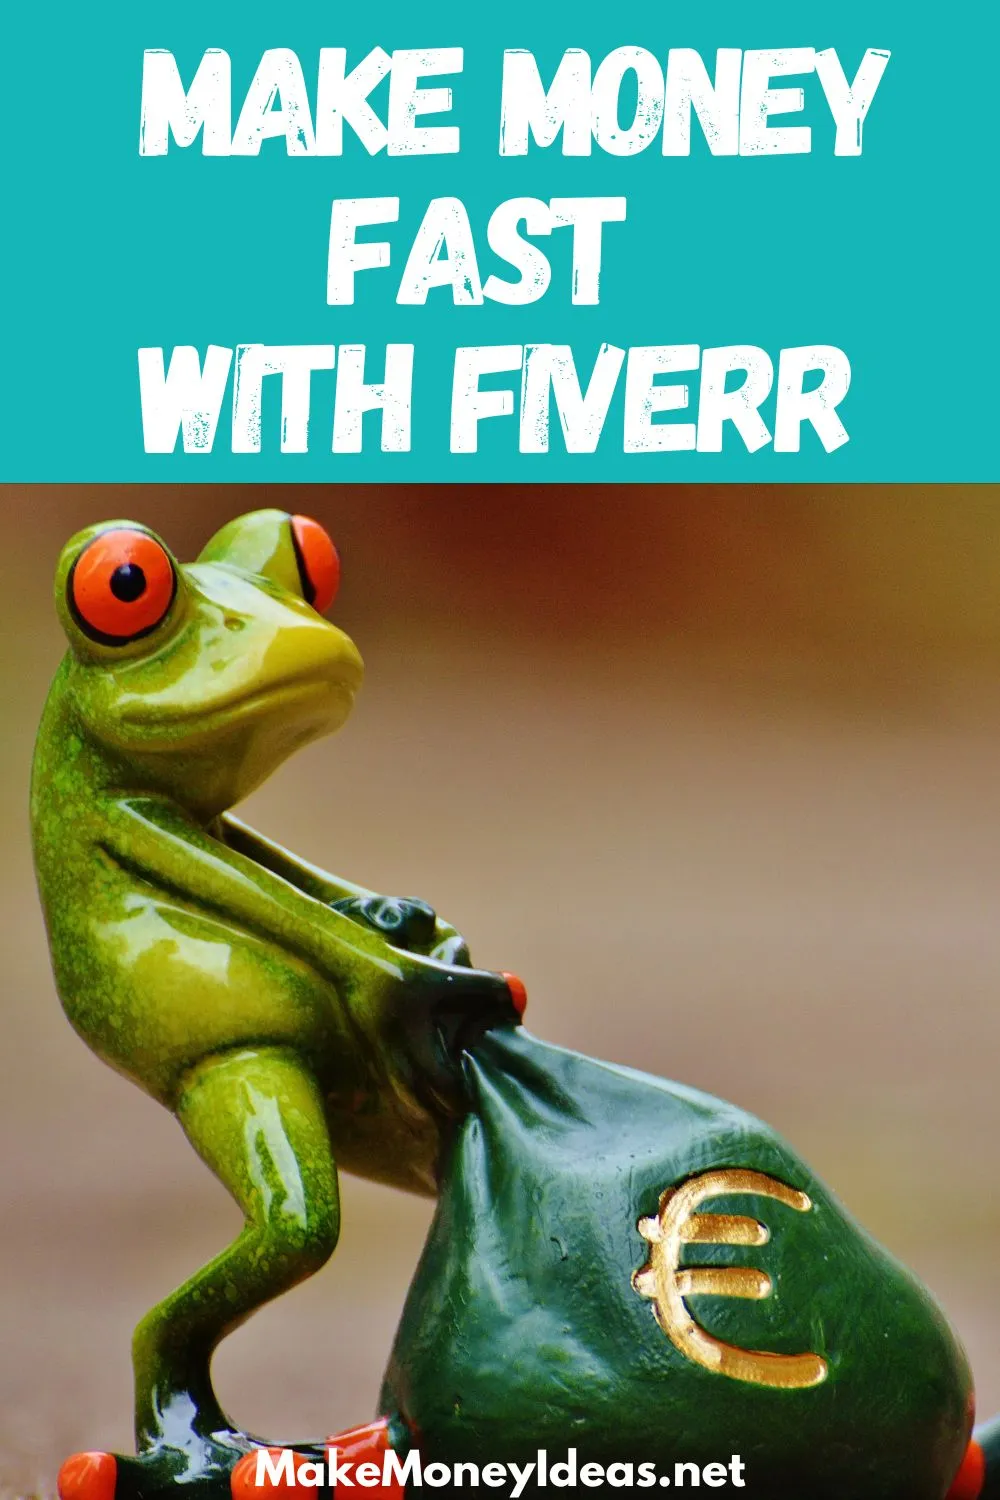 Make money online fast with fiverr